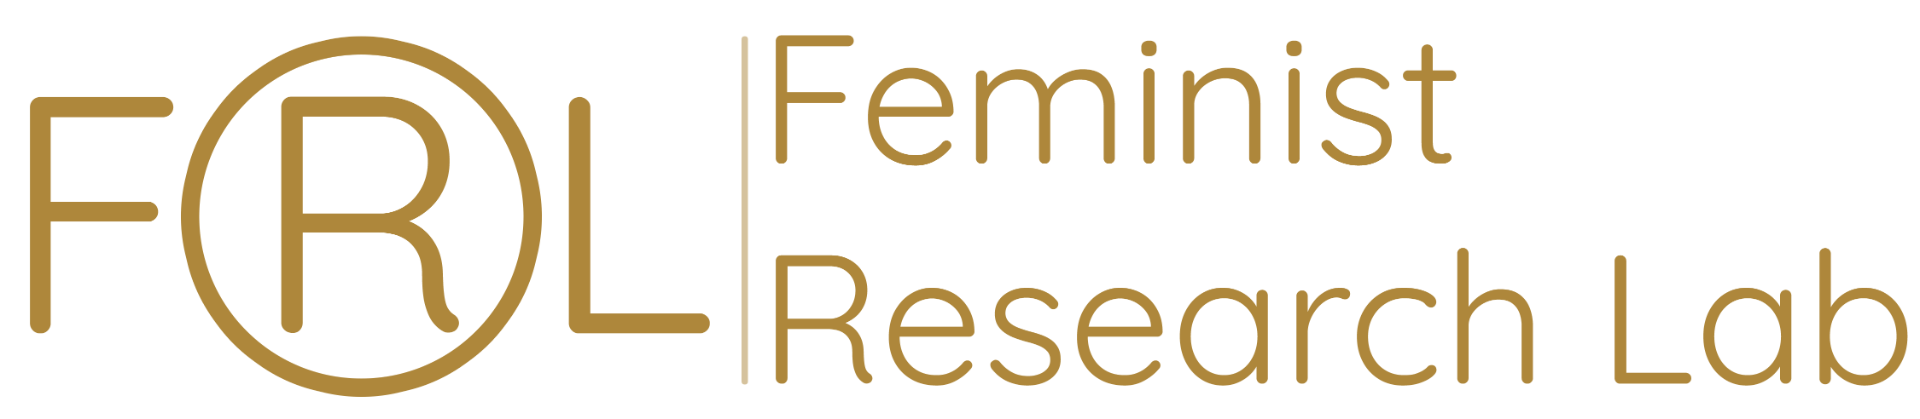 Feminist Research Lab